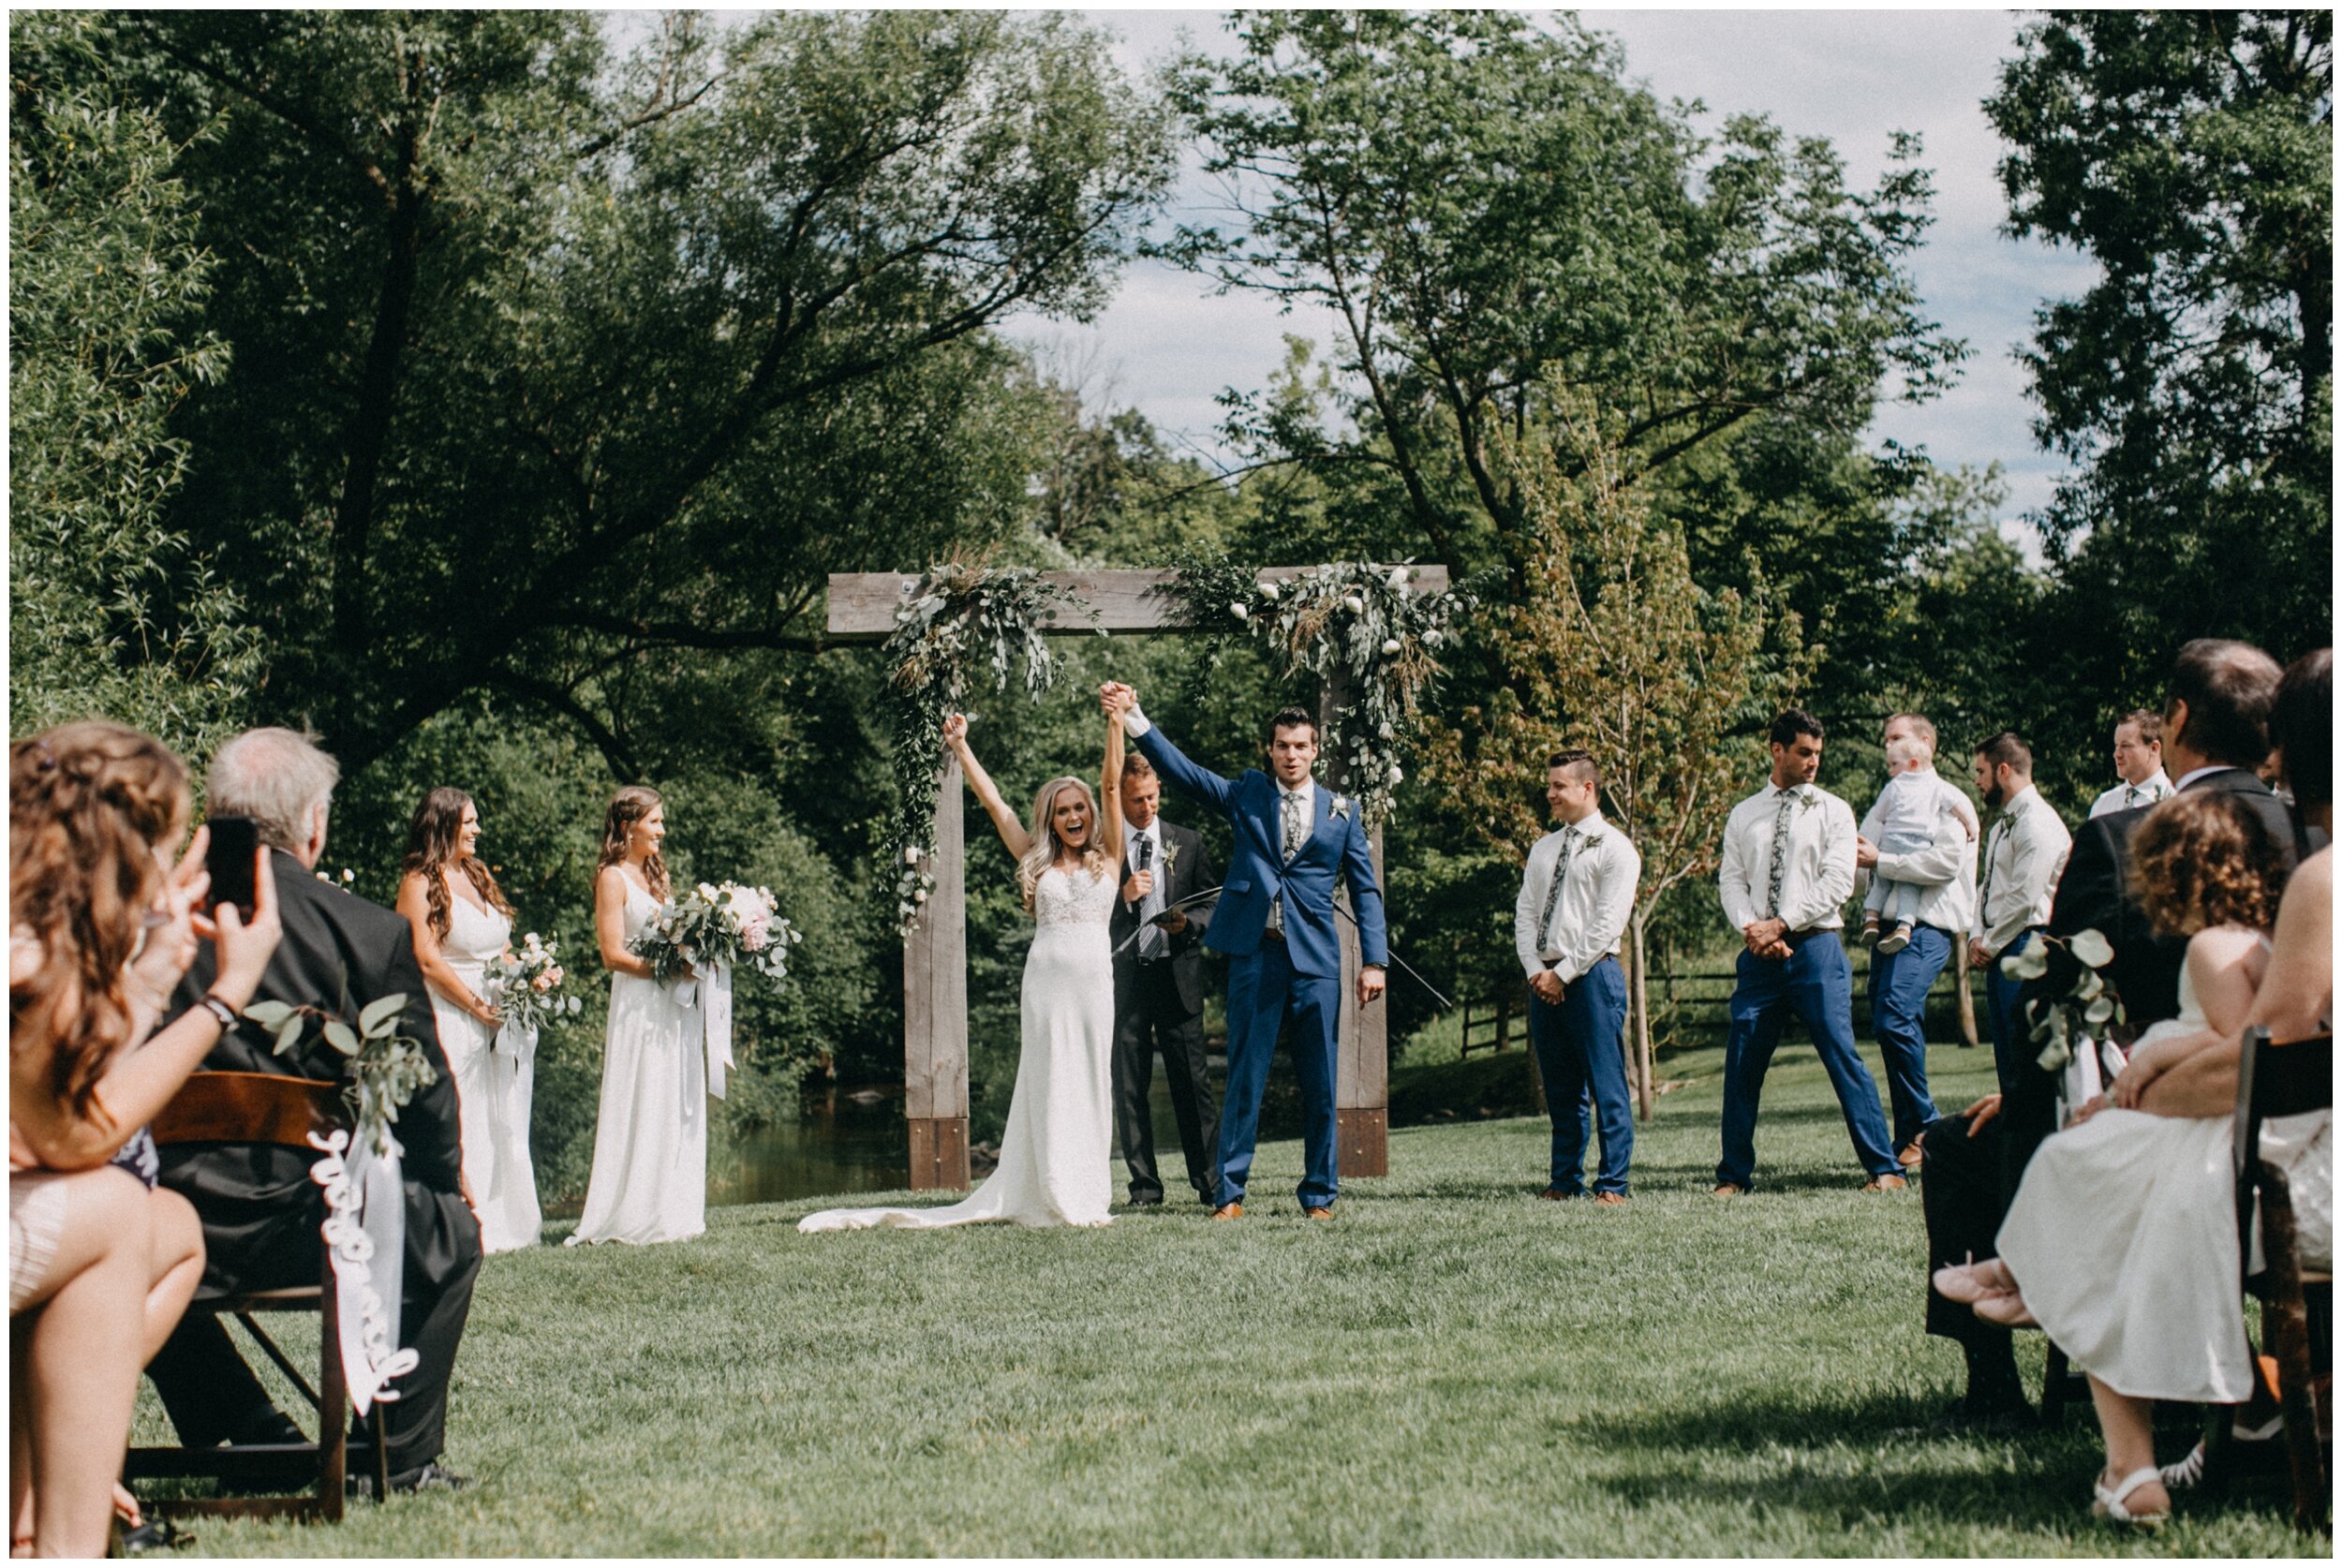 Bride and groom cheering after outdoor Minnesota barn wedding ceremony